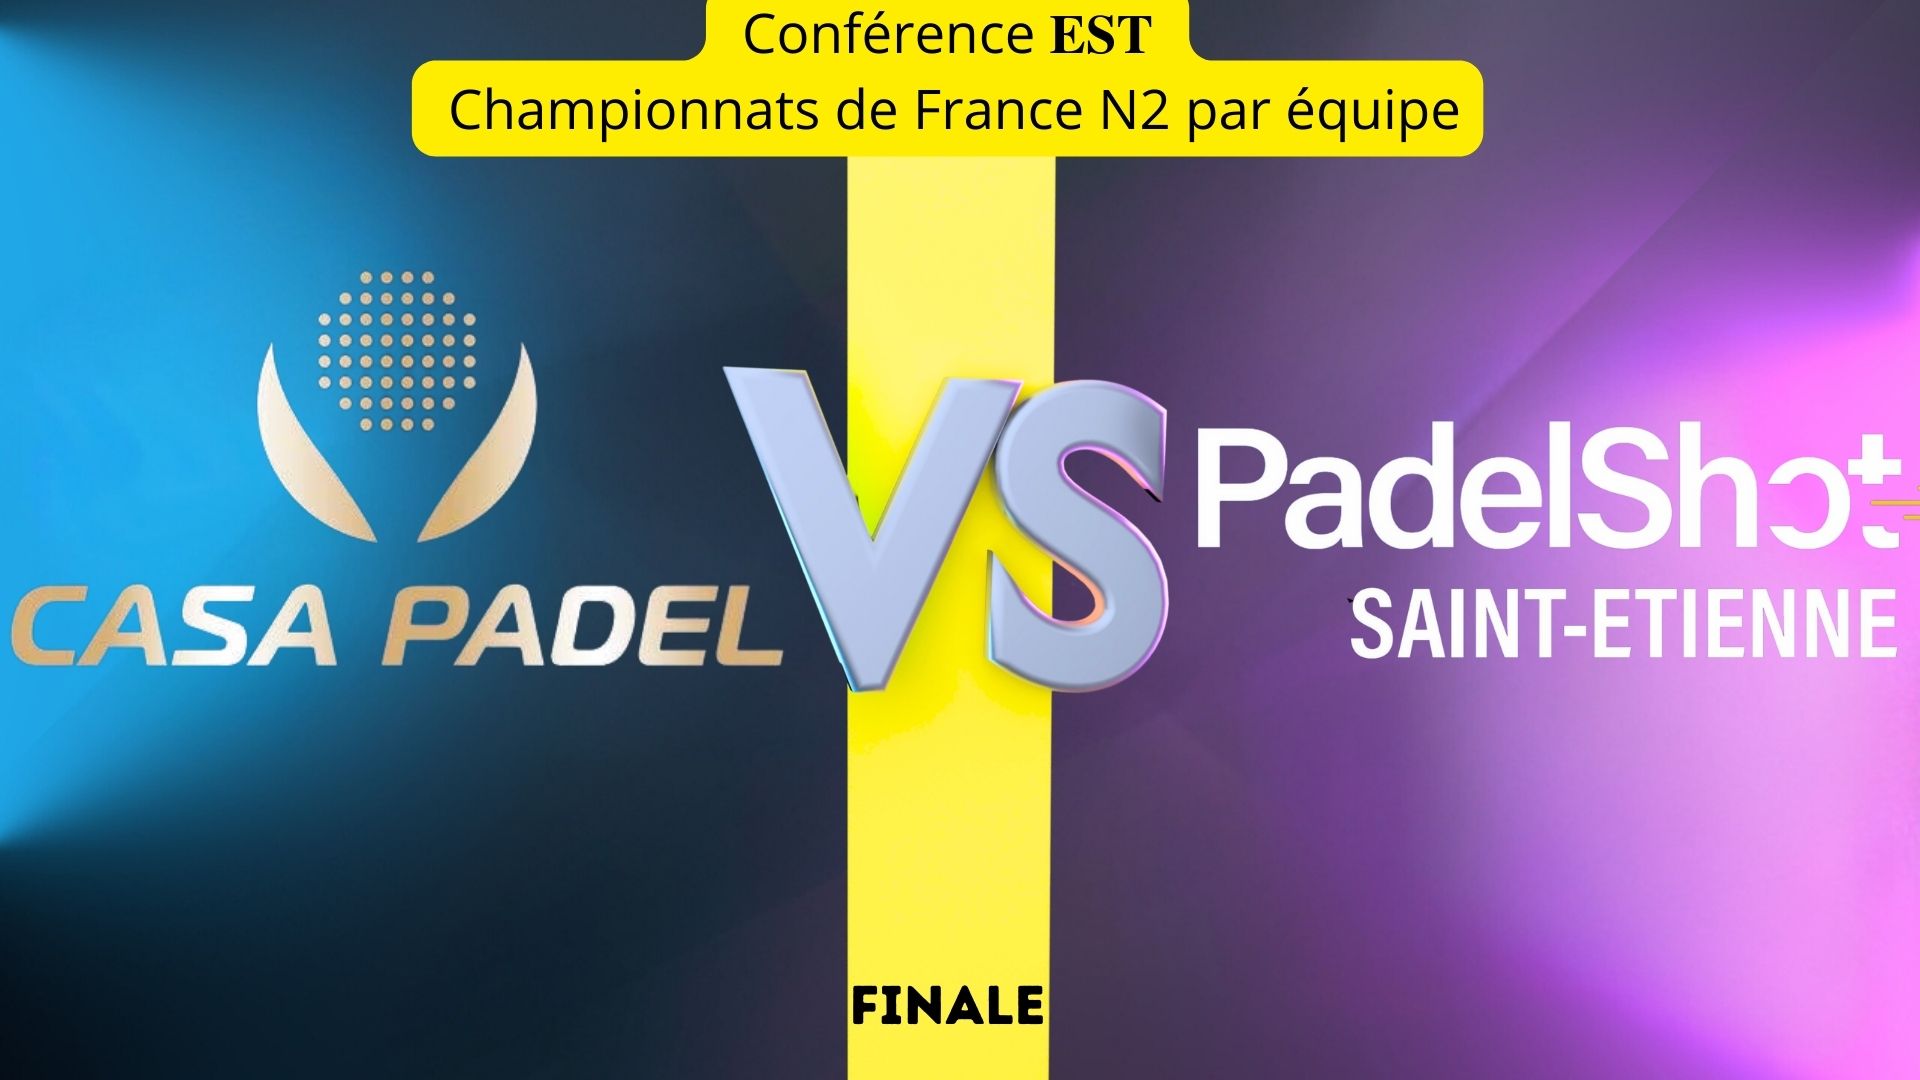 Finale Est: Casa Padel vs PadelGirato Saint-Etienne